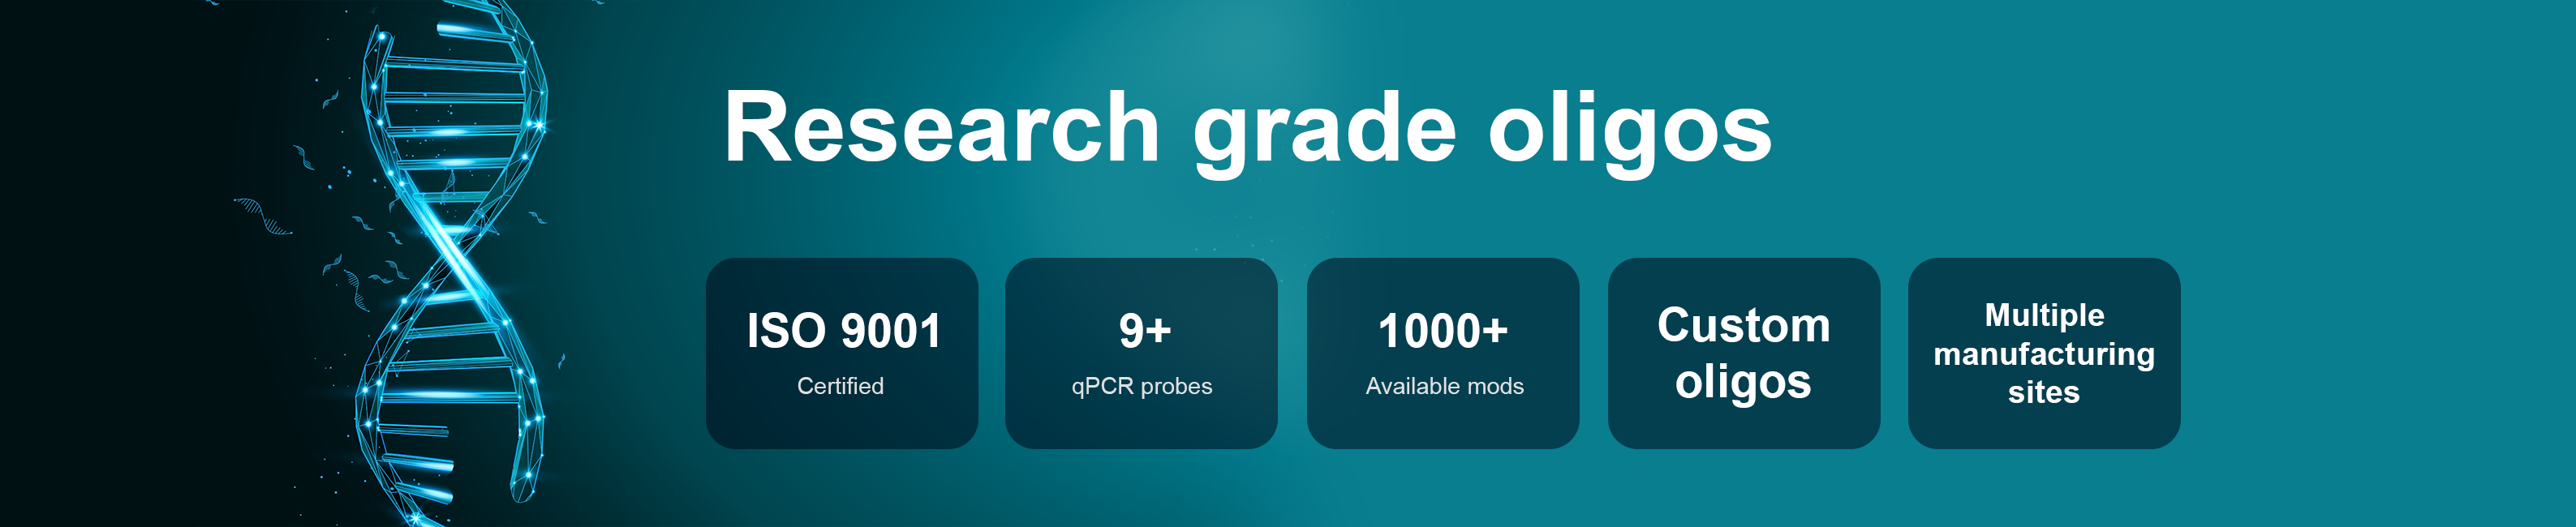 research grade oligos ISO 9001